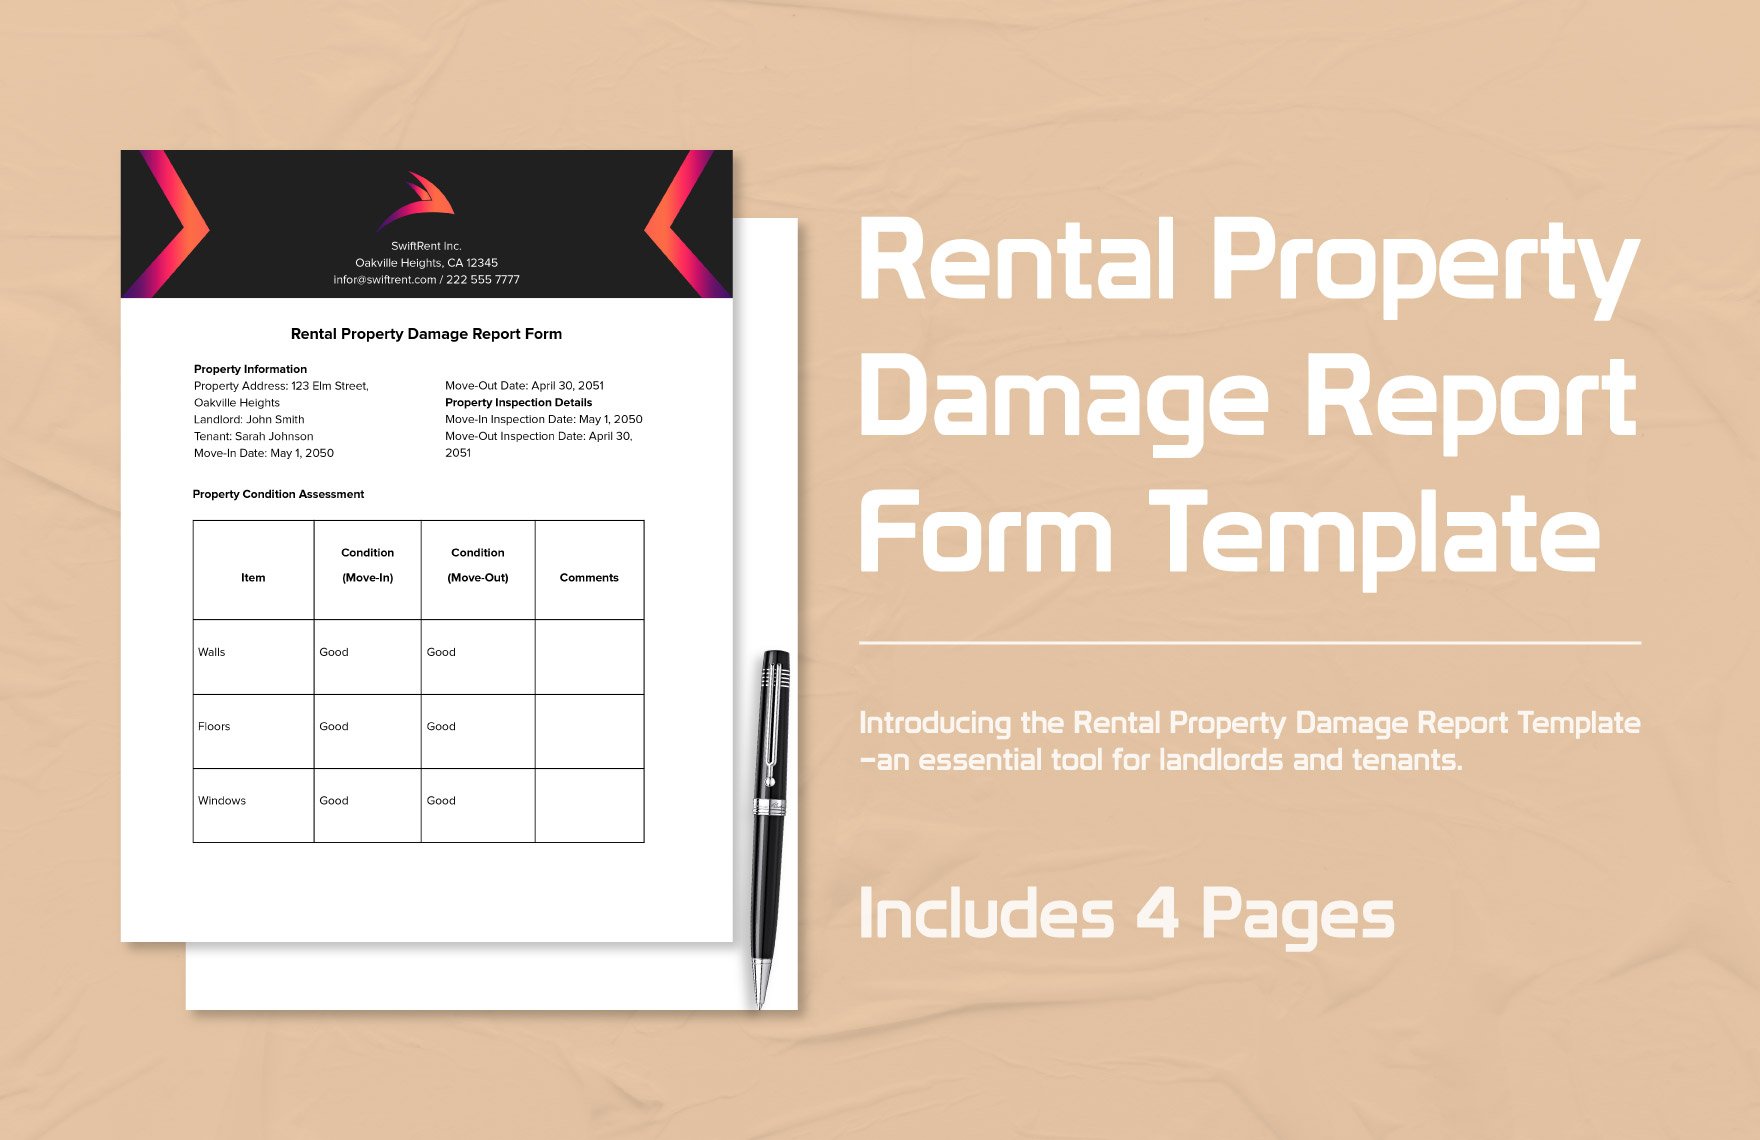 Rental Property Damage Report Form Template